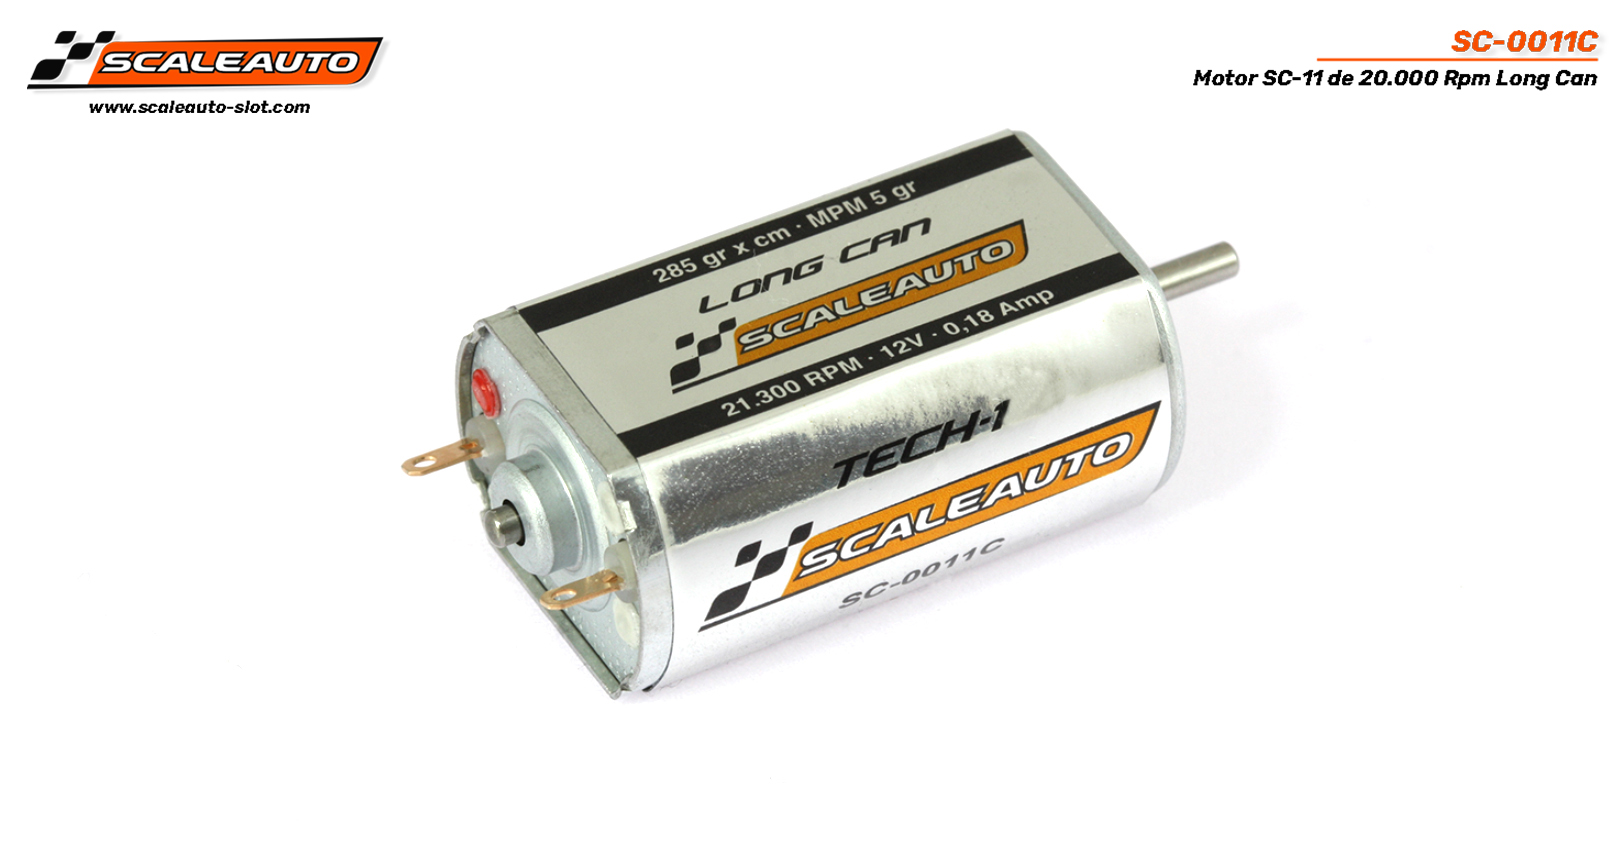 SC-0011C  21,300rpm L can motor 285g/cm torque MPM 5 grams